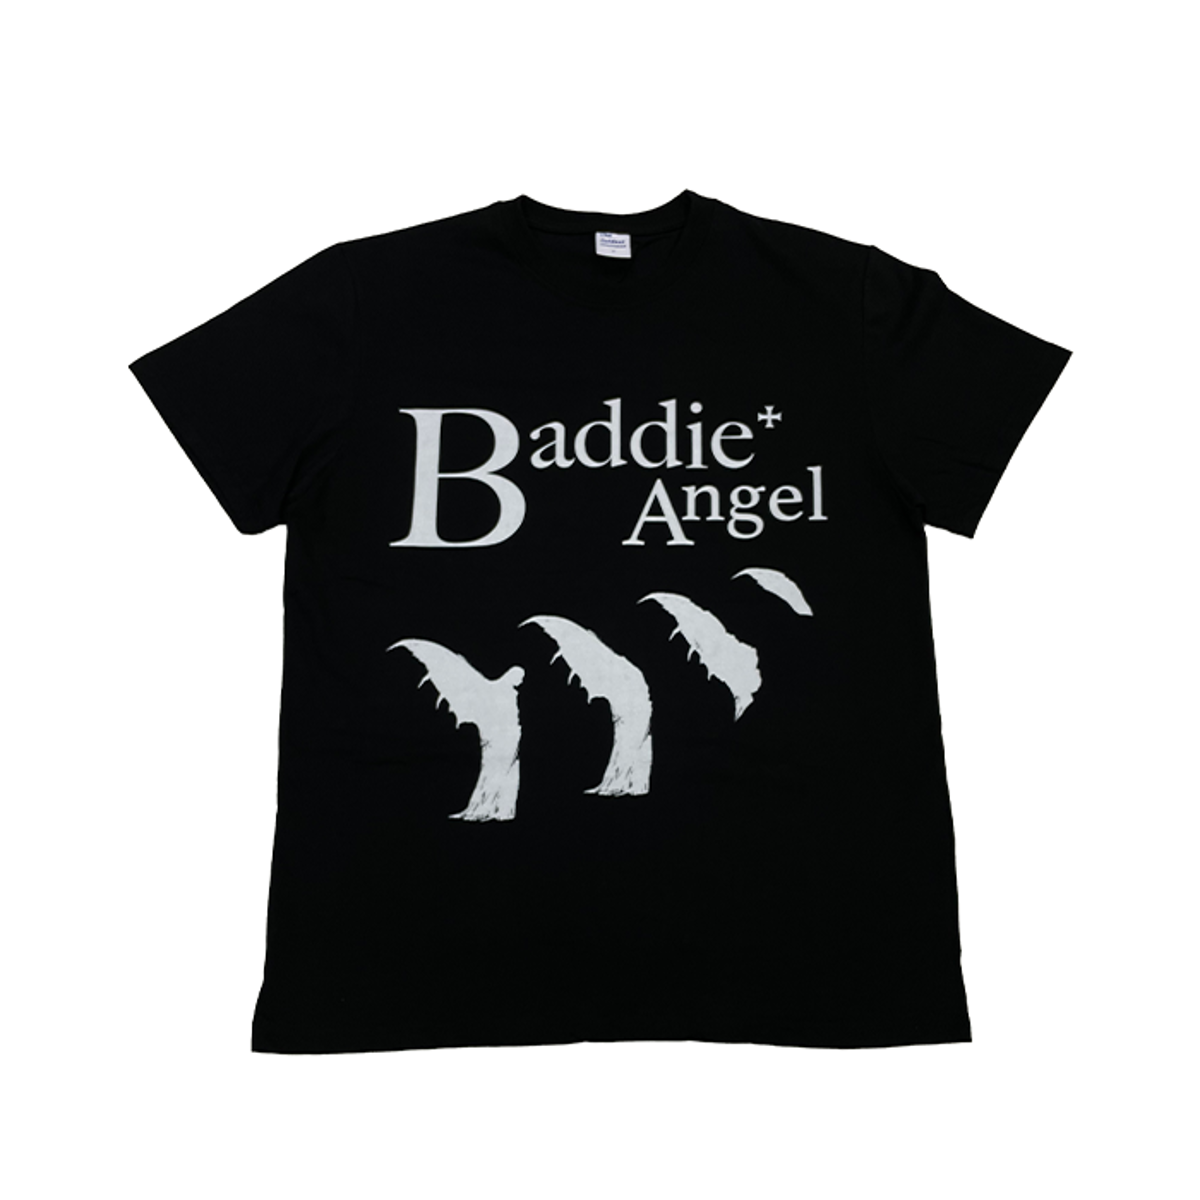 TCM baddie angel T (black)